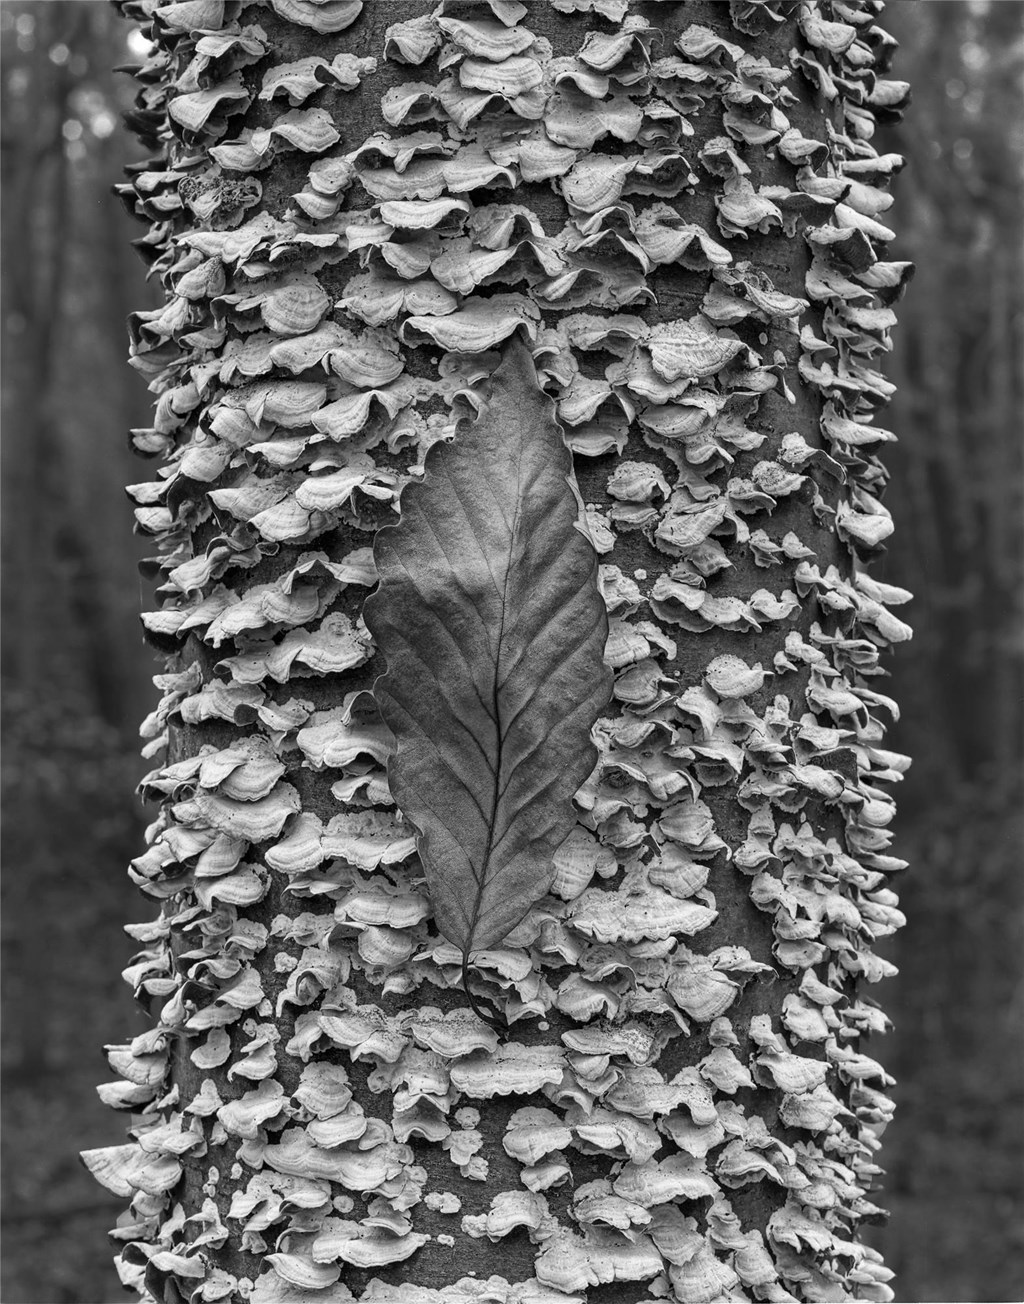 Fungi and Leaf on a Tree